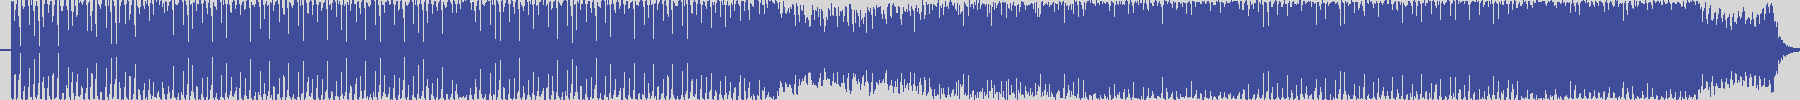 nf_boyz_records [NFY003] Stalking Wake - Fallen Juju [Mojoto Blanco's House Mix] audio wave form